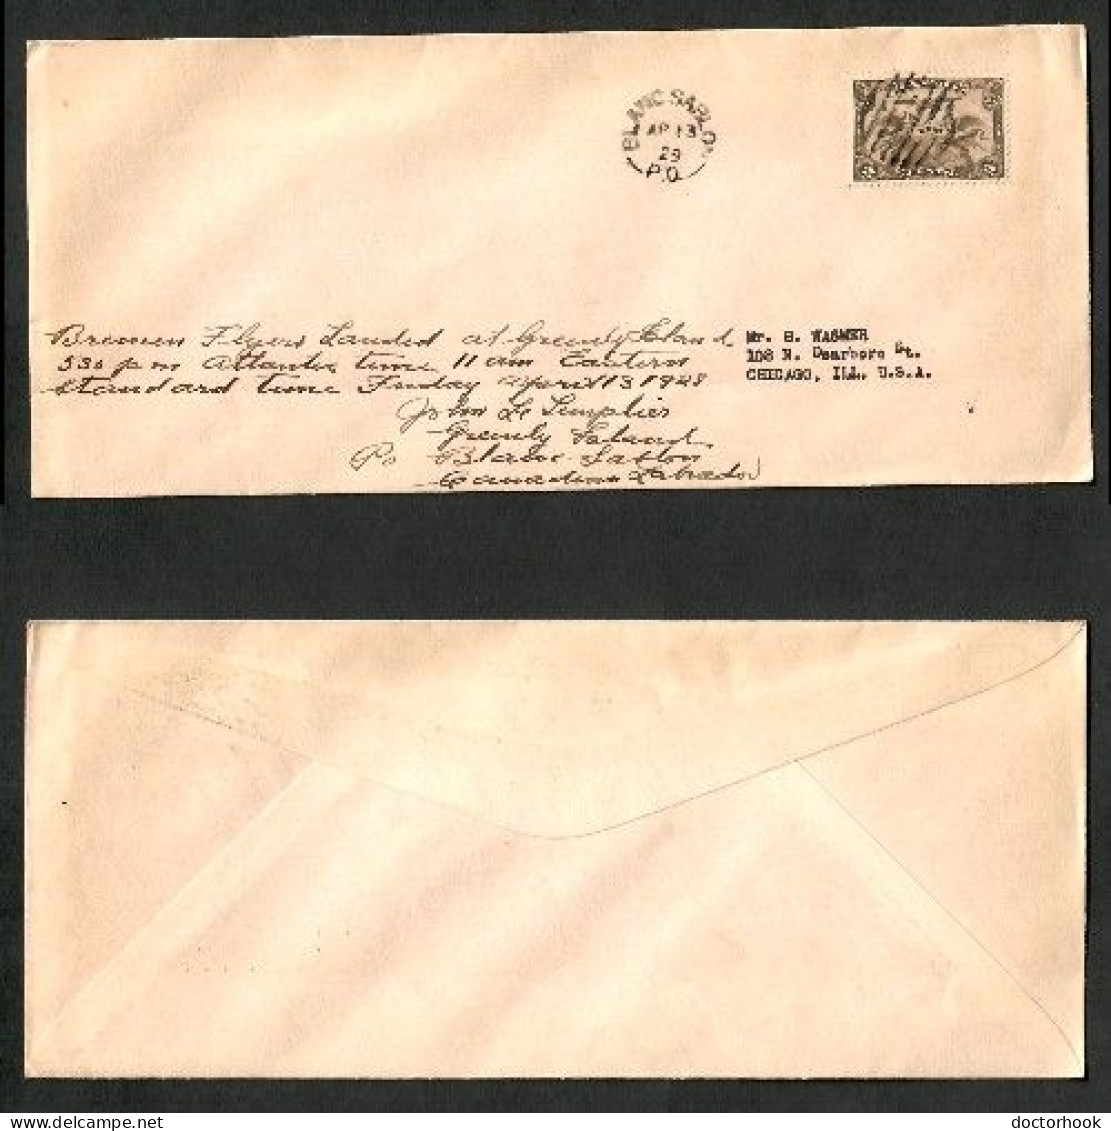 "BREMEN DAY---BLANC SABLON" FIRST EAST WEST FLIGHT---BREMEN FLYERS (APRIL 13/1929) (OS-779) - Postal History